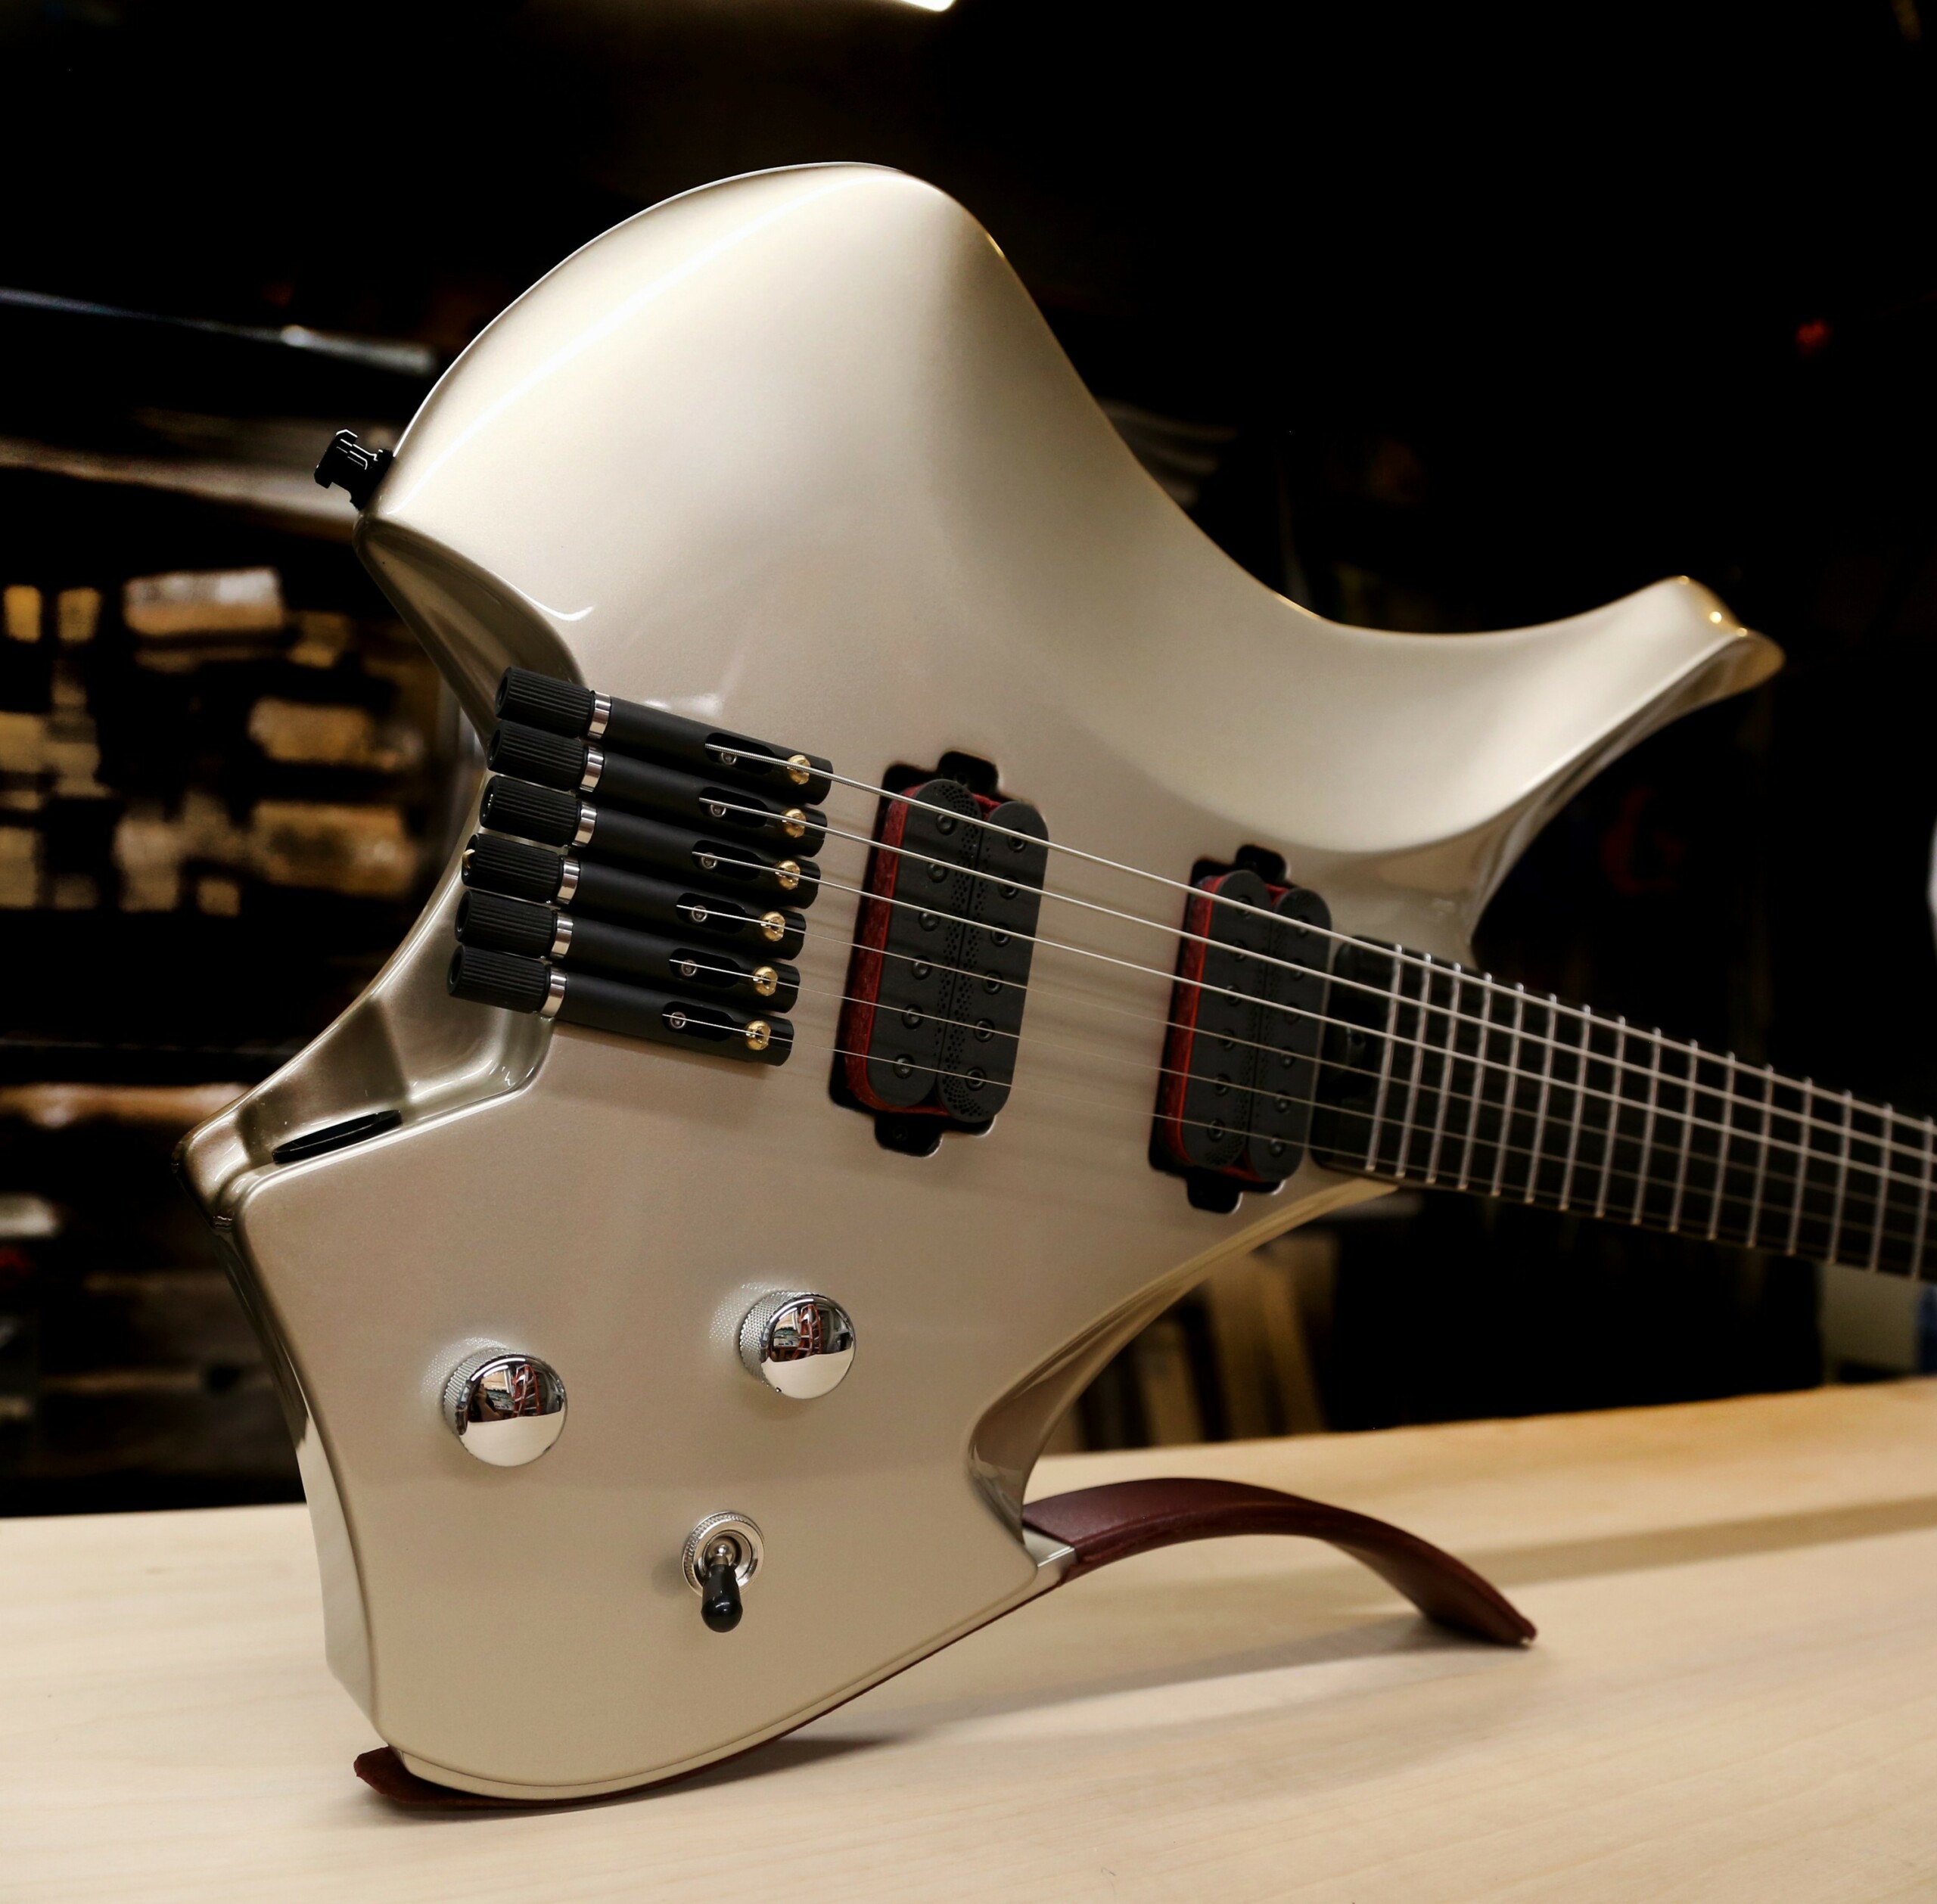 mclaren s speedtail hypercar inspired this xp2 custom built one off guitar 7 scaled